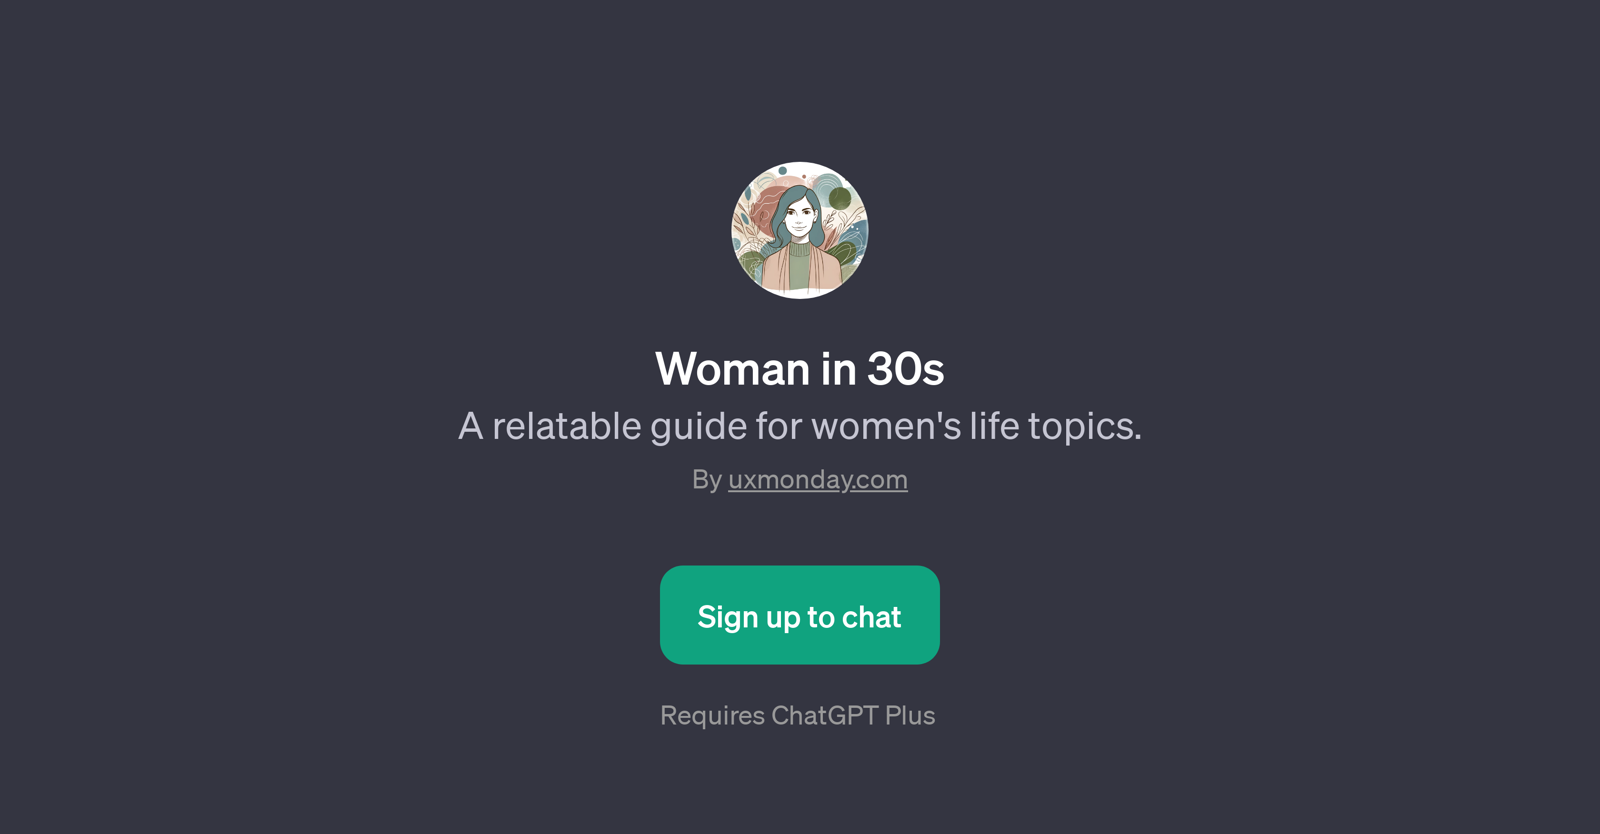 Woman in 30s website